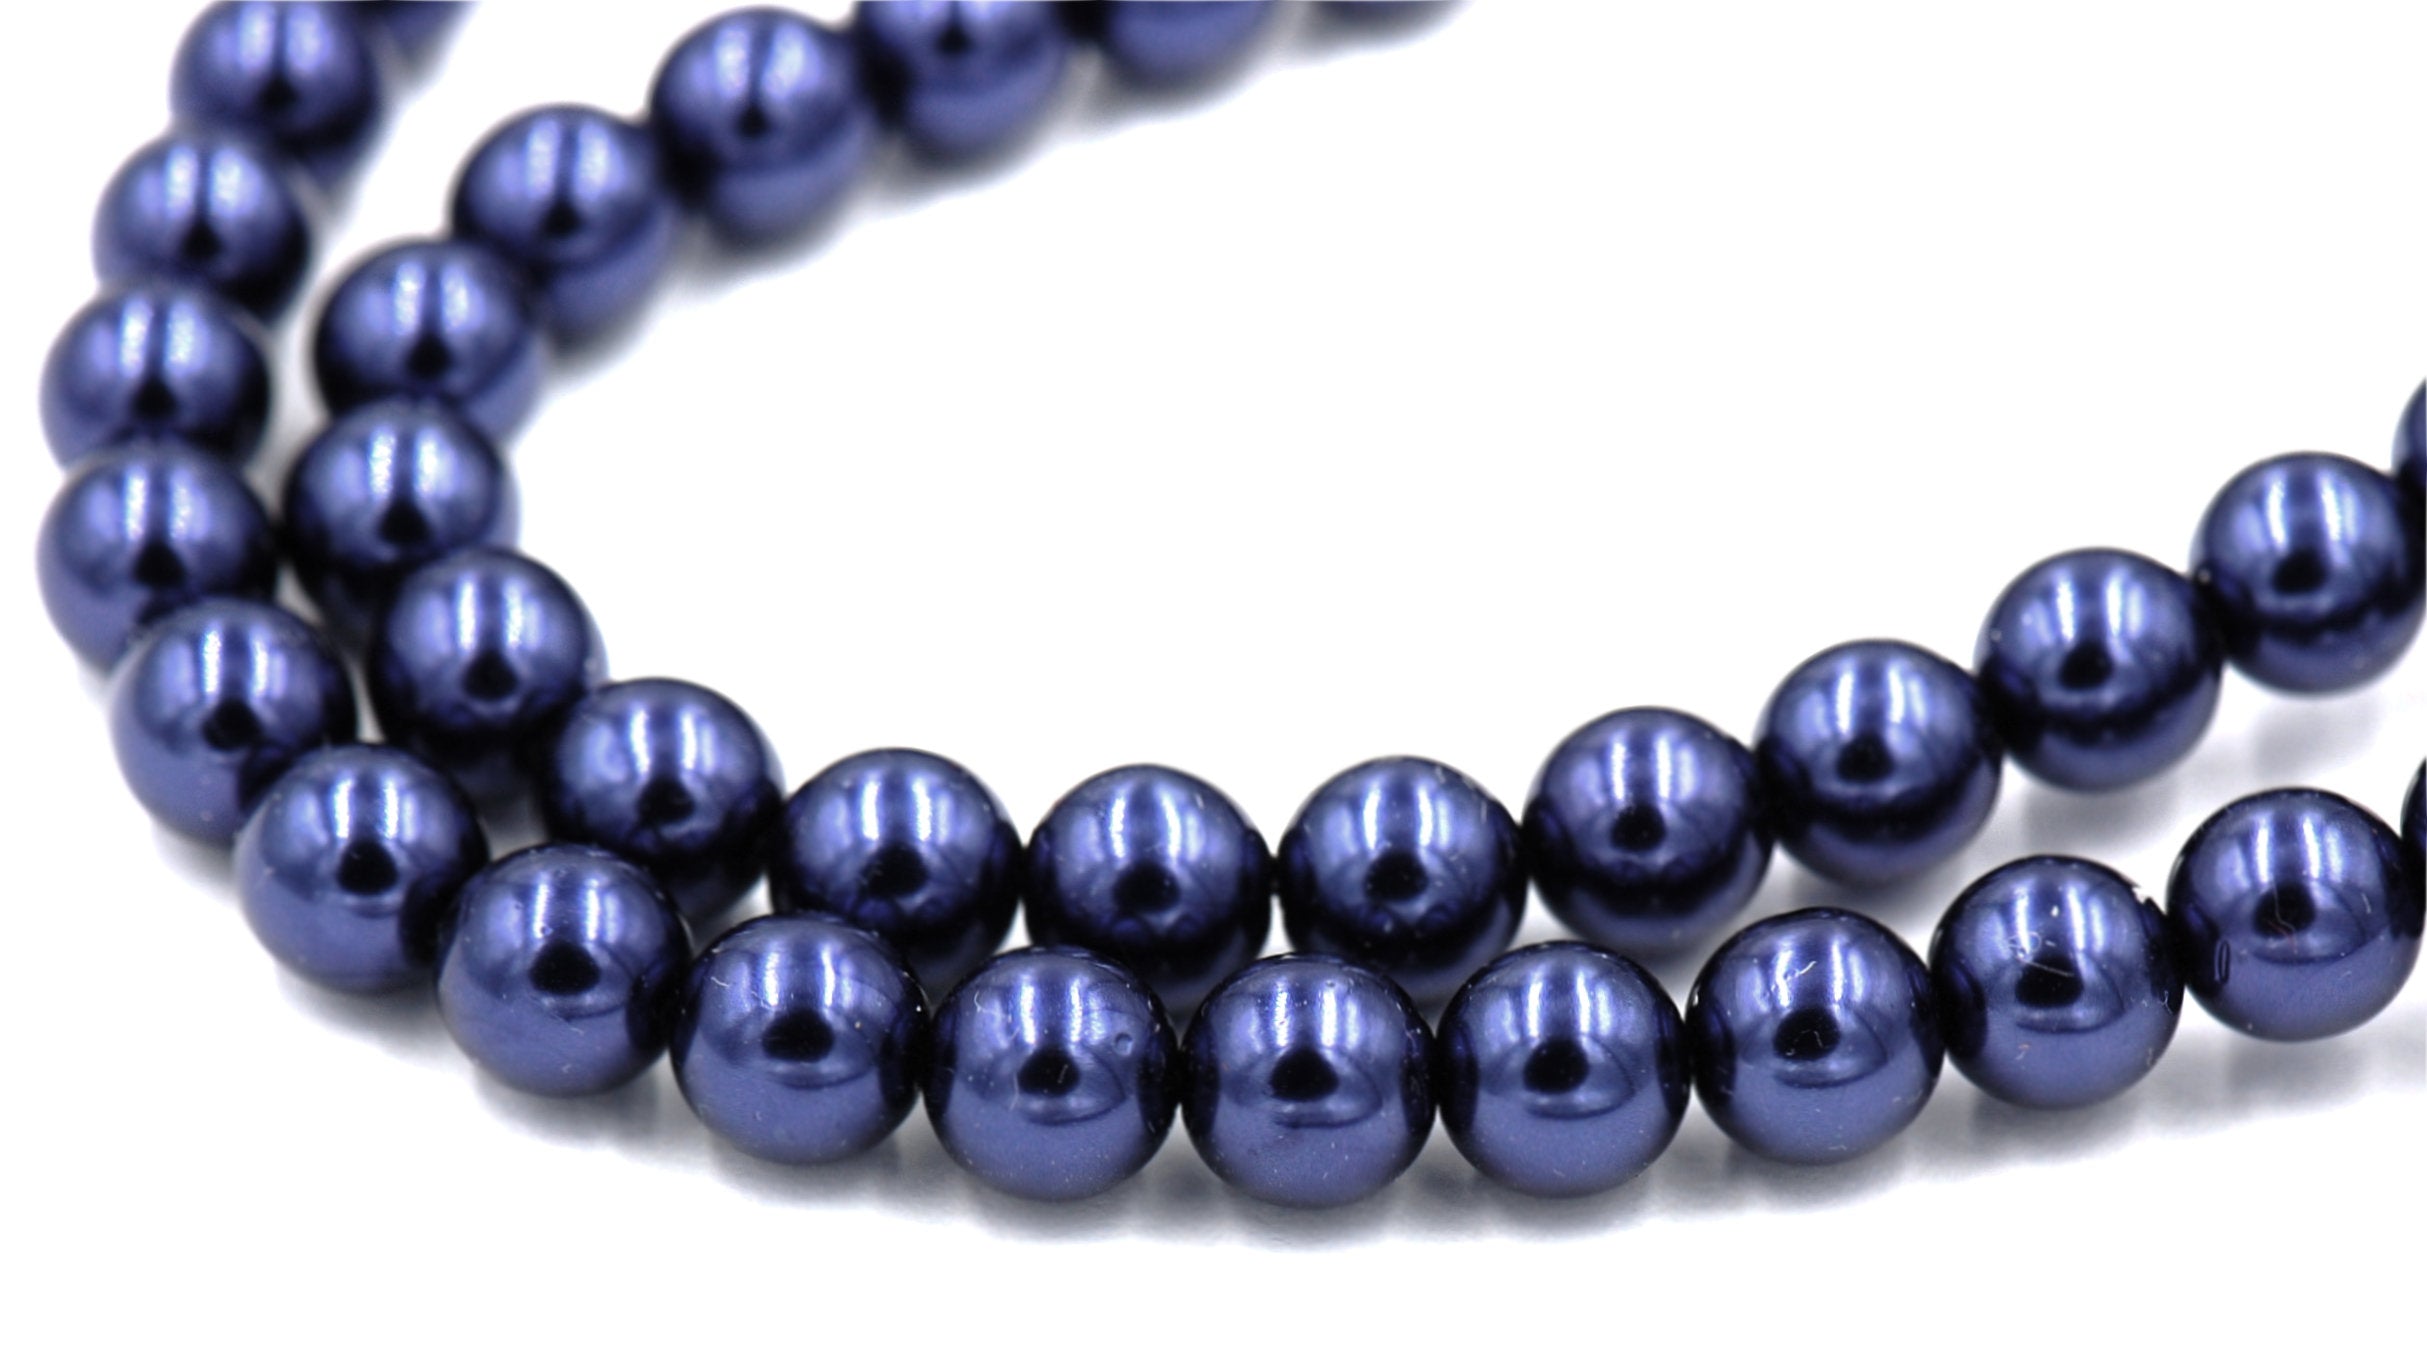 Czech Glass Pearl Coated Royal Purple Beads 4mm, 6mm, 8mm